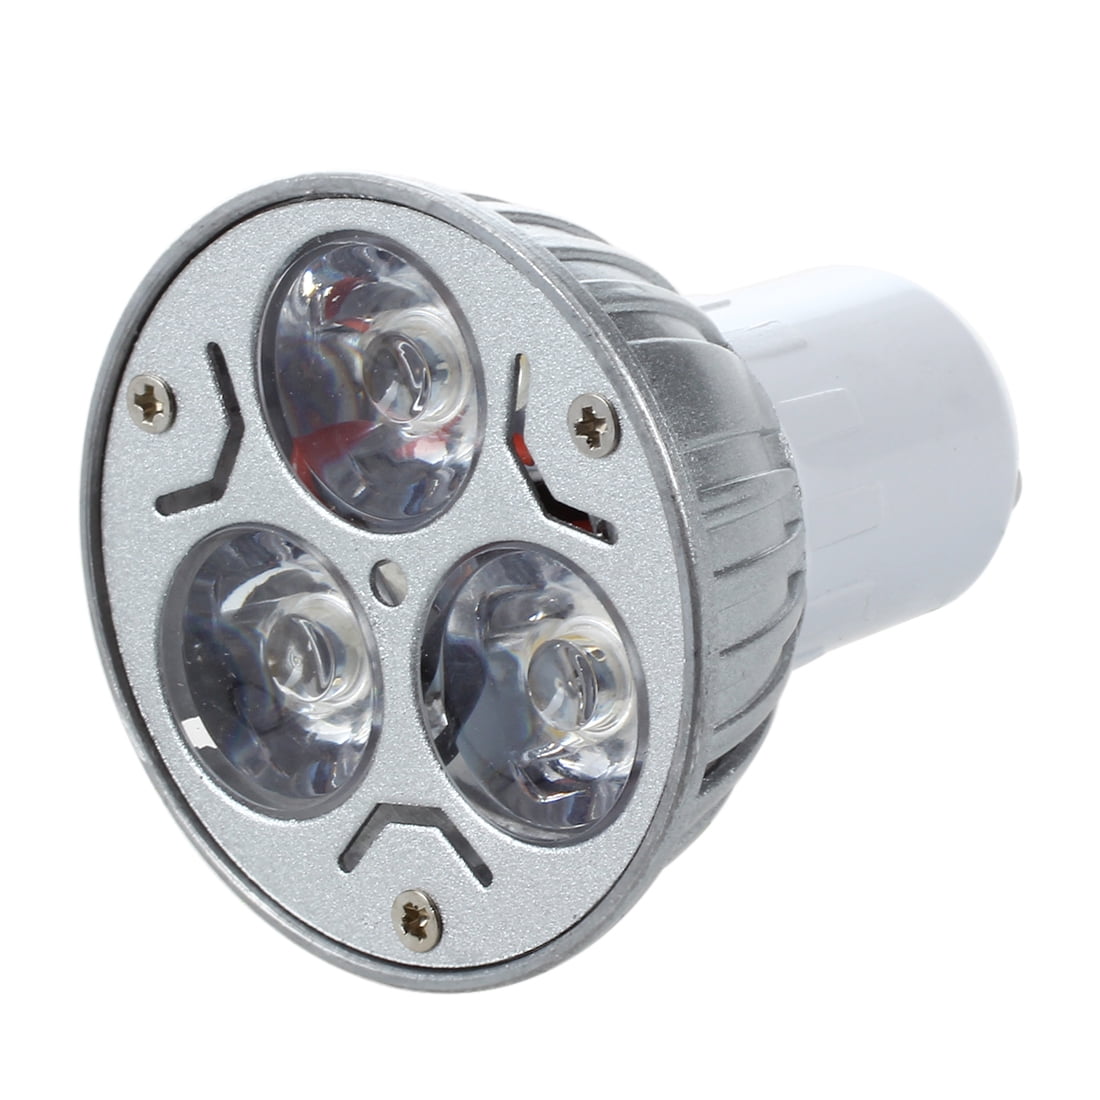 GU10 LAMP LIGHT BULB has 5W WARM LED 12V 3 3W WHITE